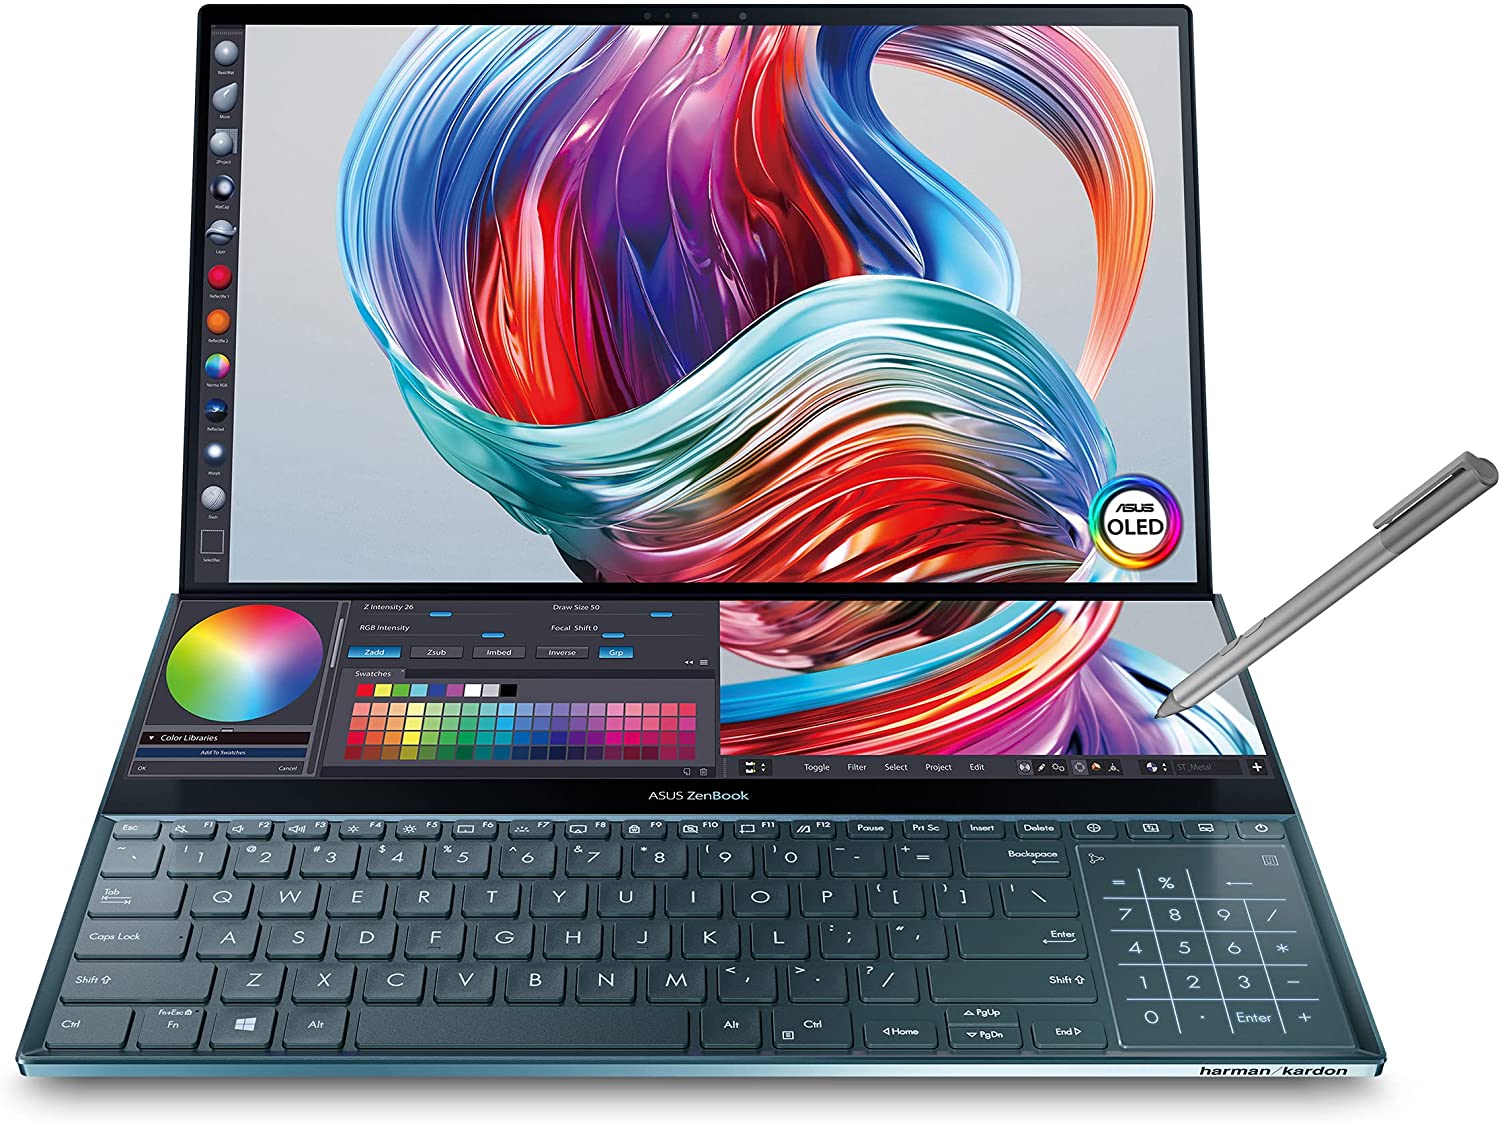 Buy ASUS ZenBook Pro Duo UX581 Laptop, 15.6” 4K UHD NanoEdge Touch Display, Intel Core i7-10750H, 16GB RAM, 1TB PCIe SSD, GeForce RTX 2060, ScreenPad Plus, Windows 10 Pro, Celestial Blue, UX581LV-XS74T